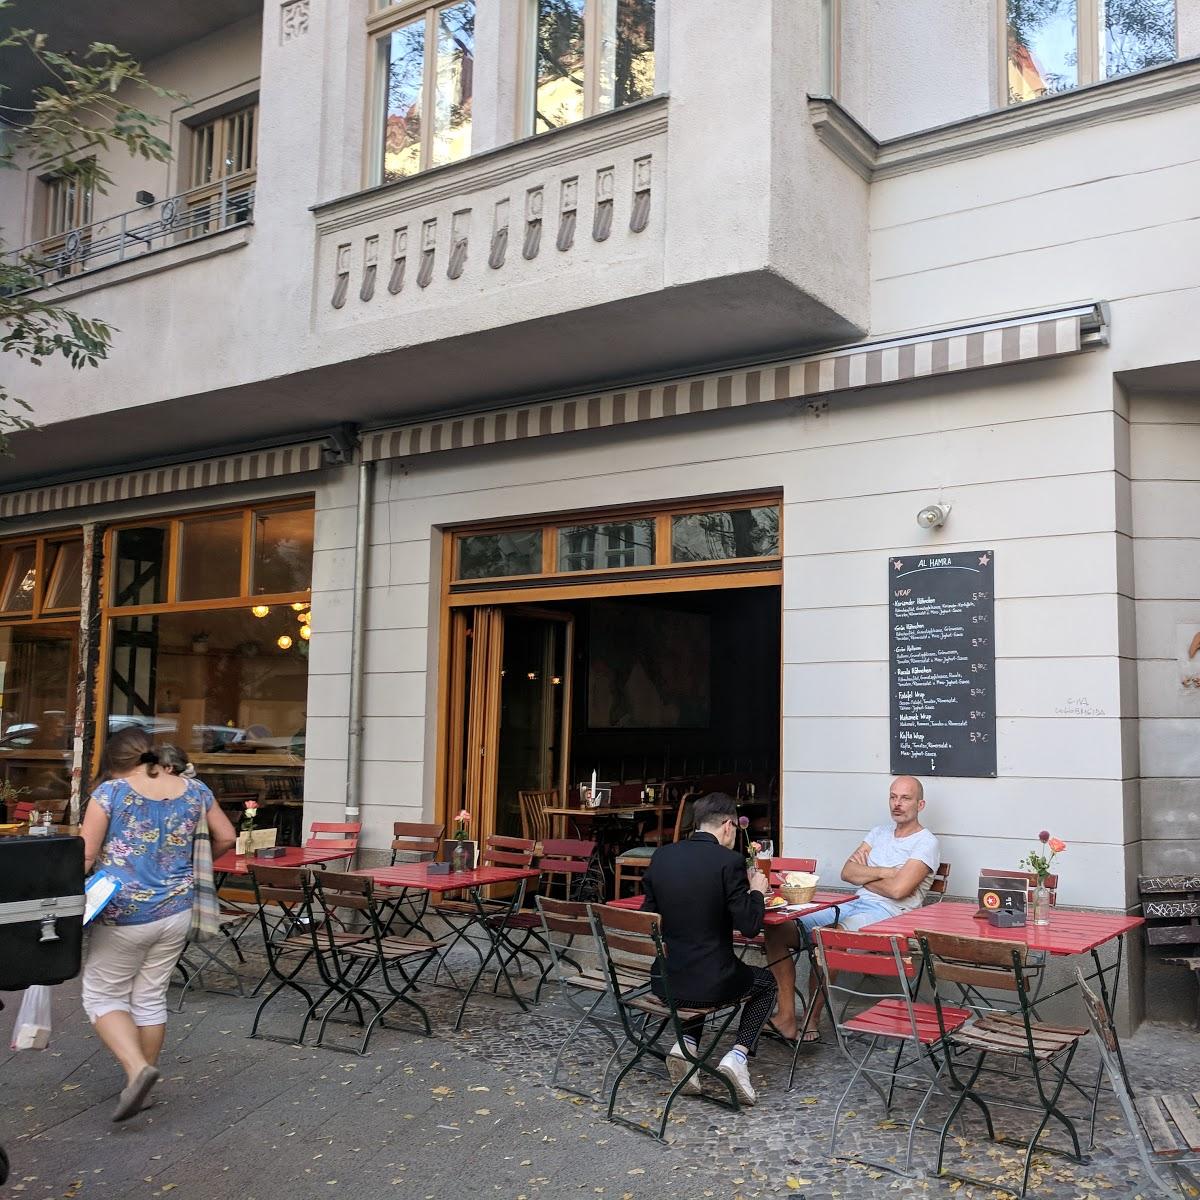 Restaurant "Al Hamra" in Berlin